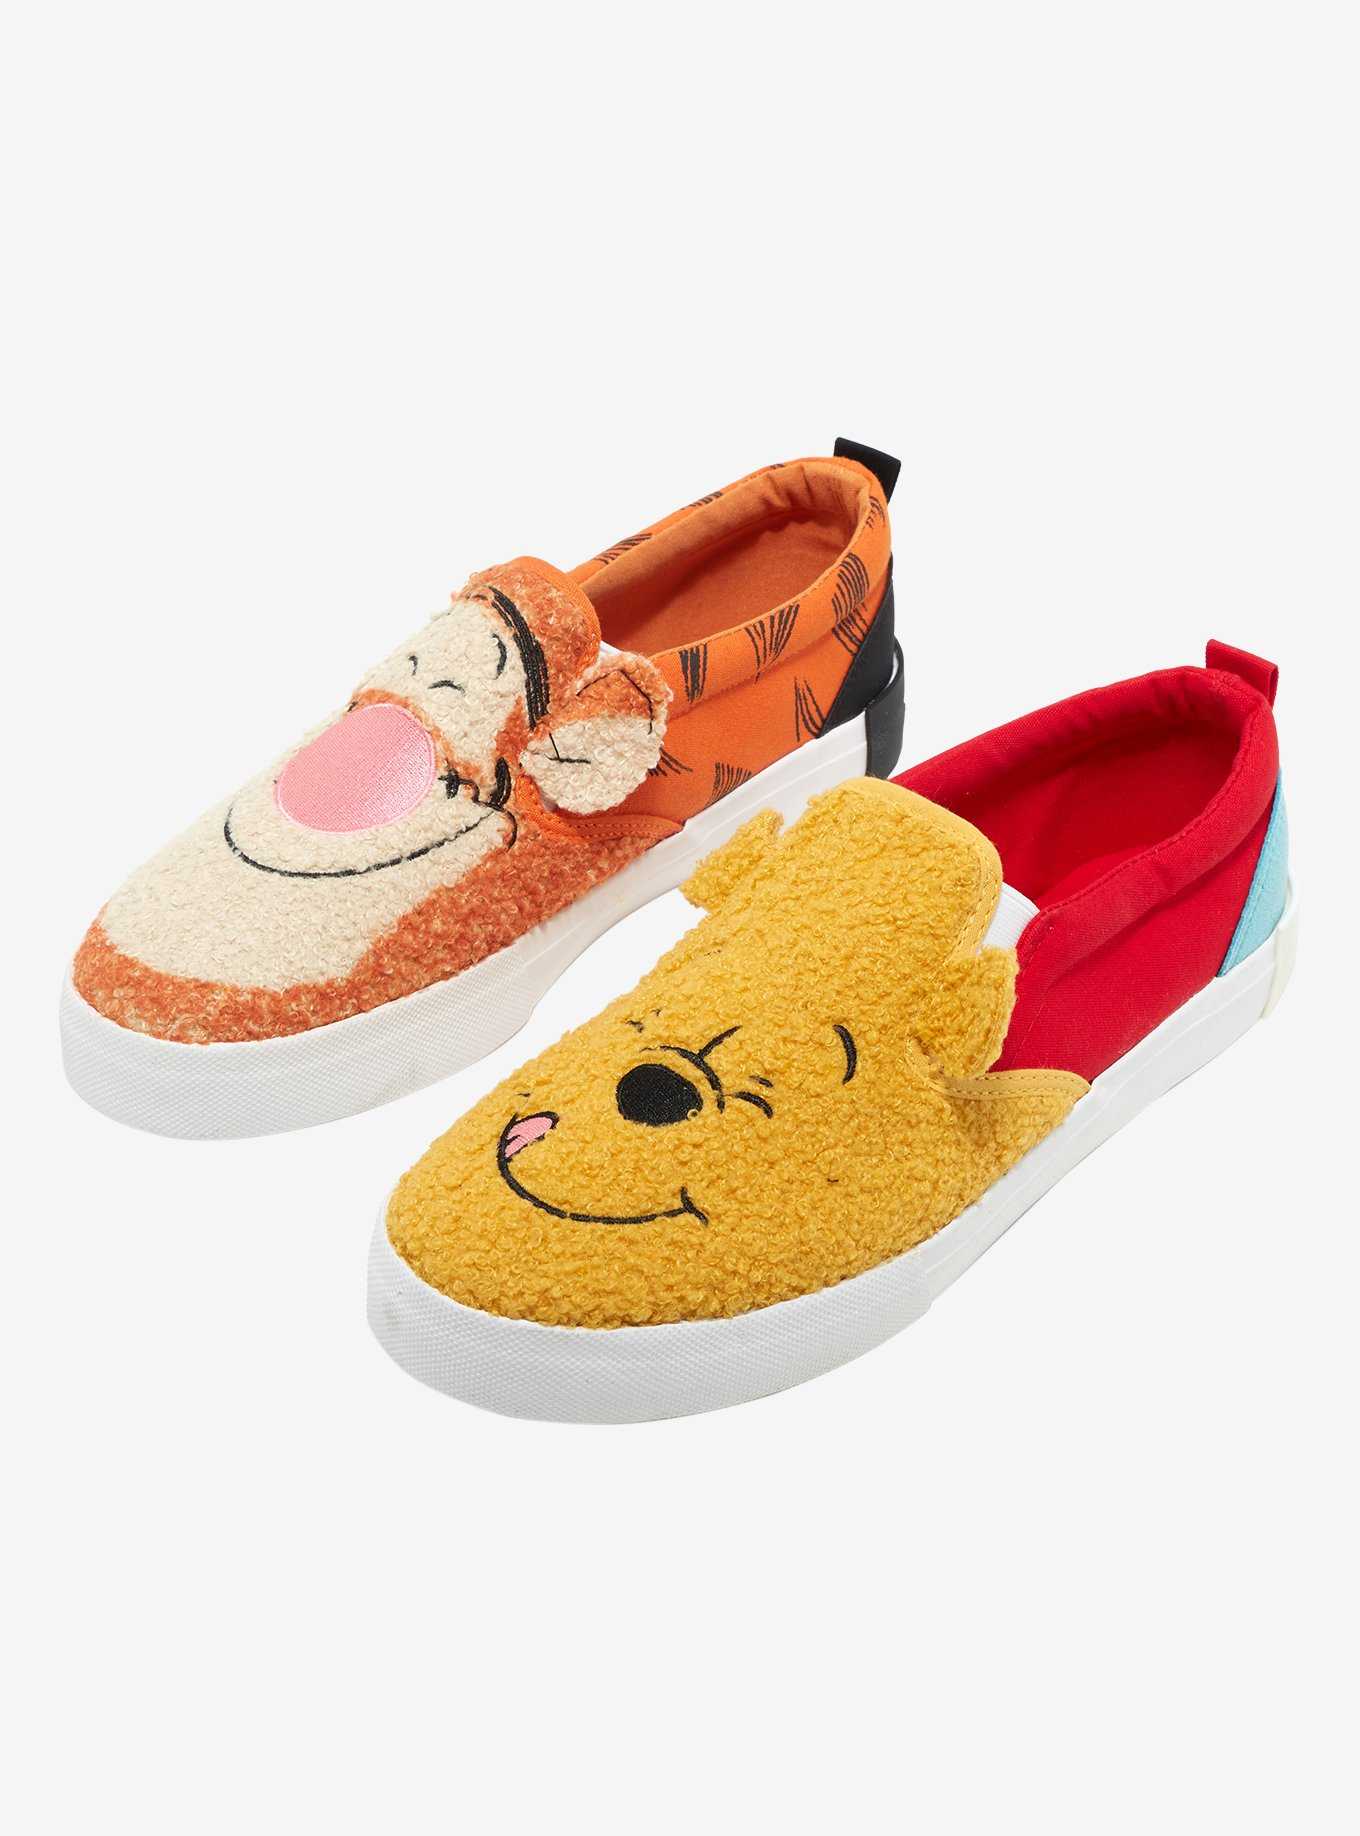 Disney Winnie The Pooh Fuzzy Tigger & Pooh Slip-On Sneakers, , hi-res